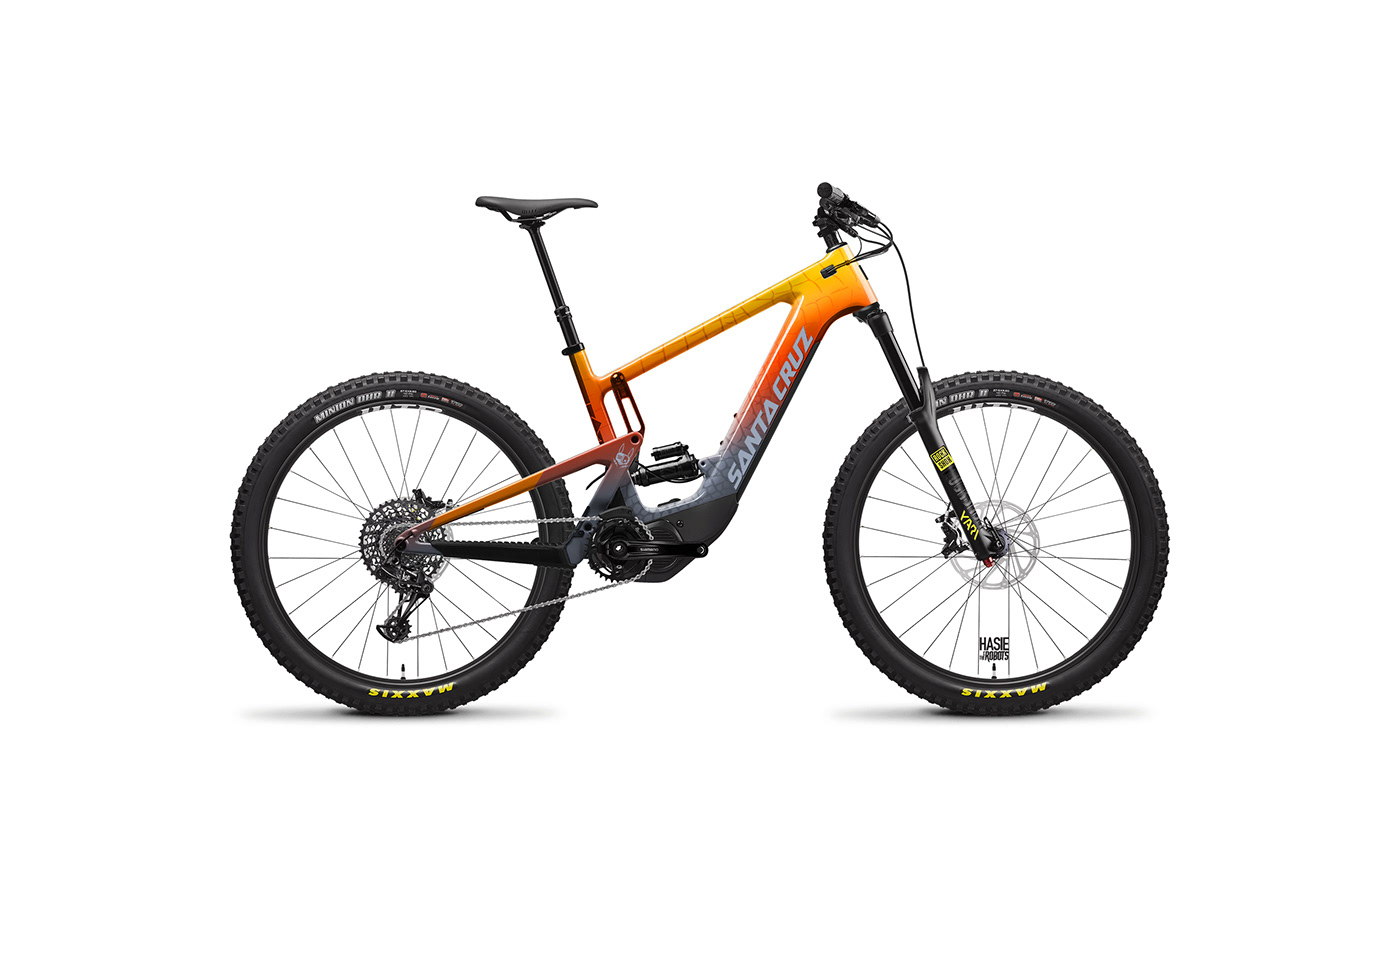 Custom wrap design on a electric mountain bike. Orange with gray